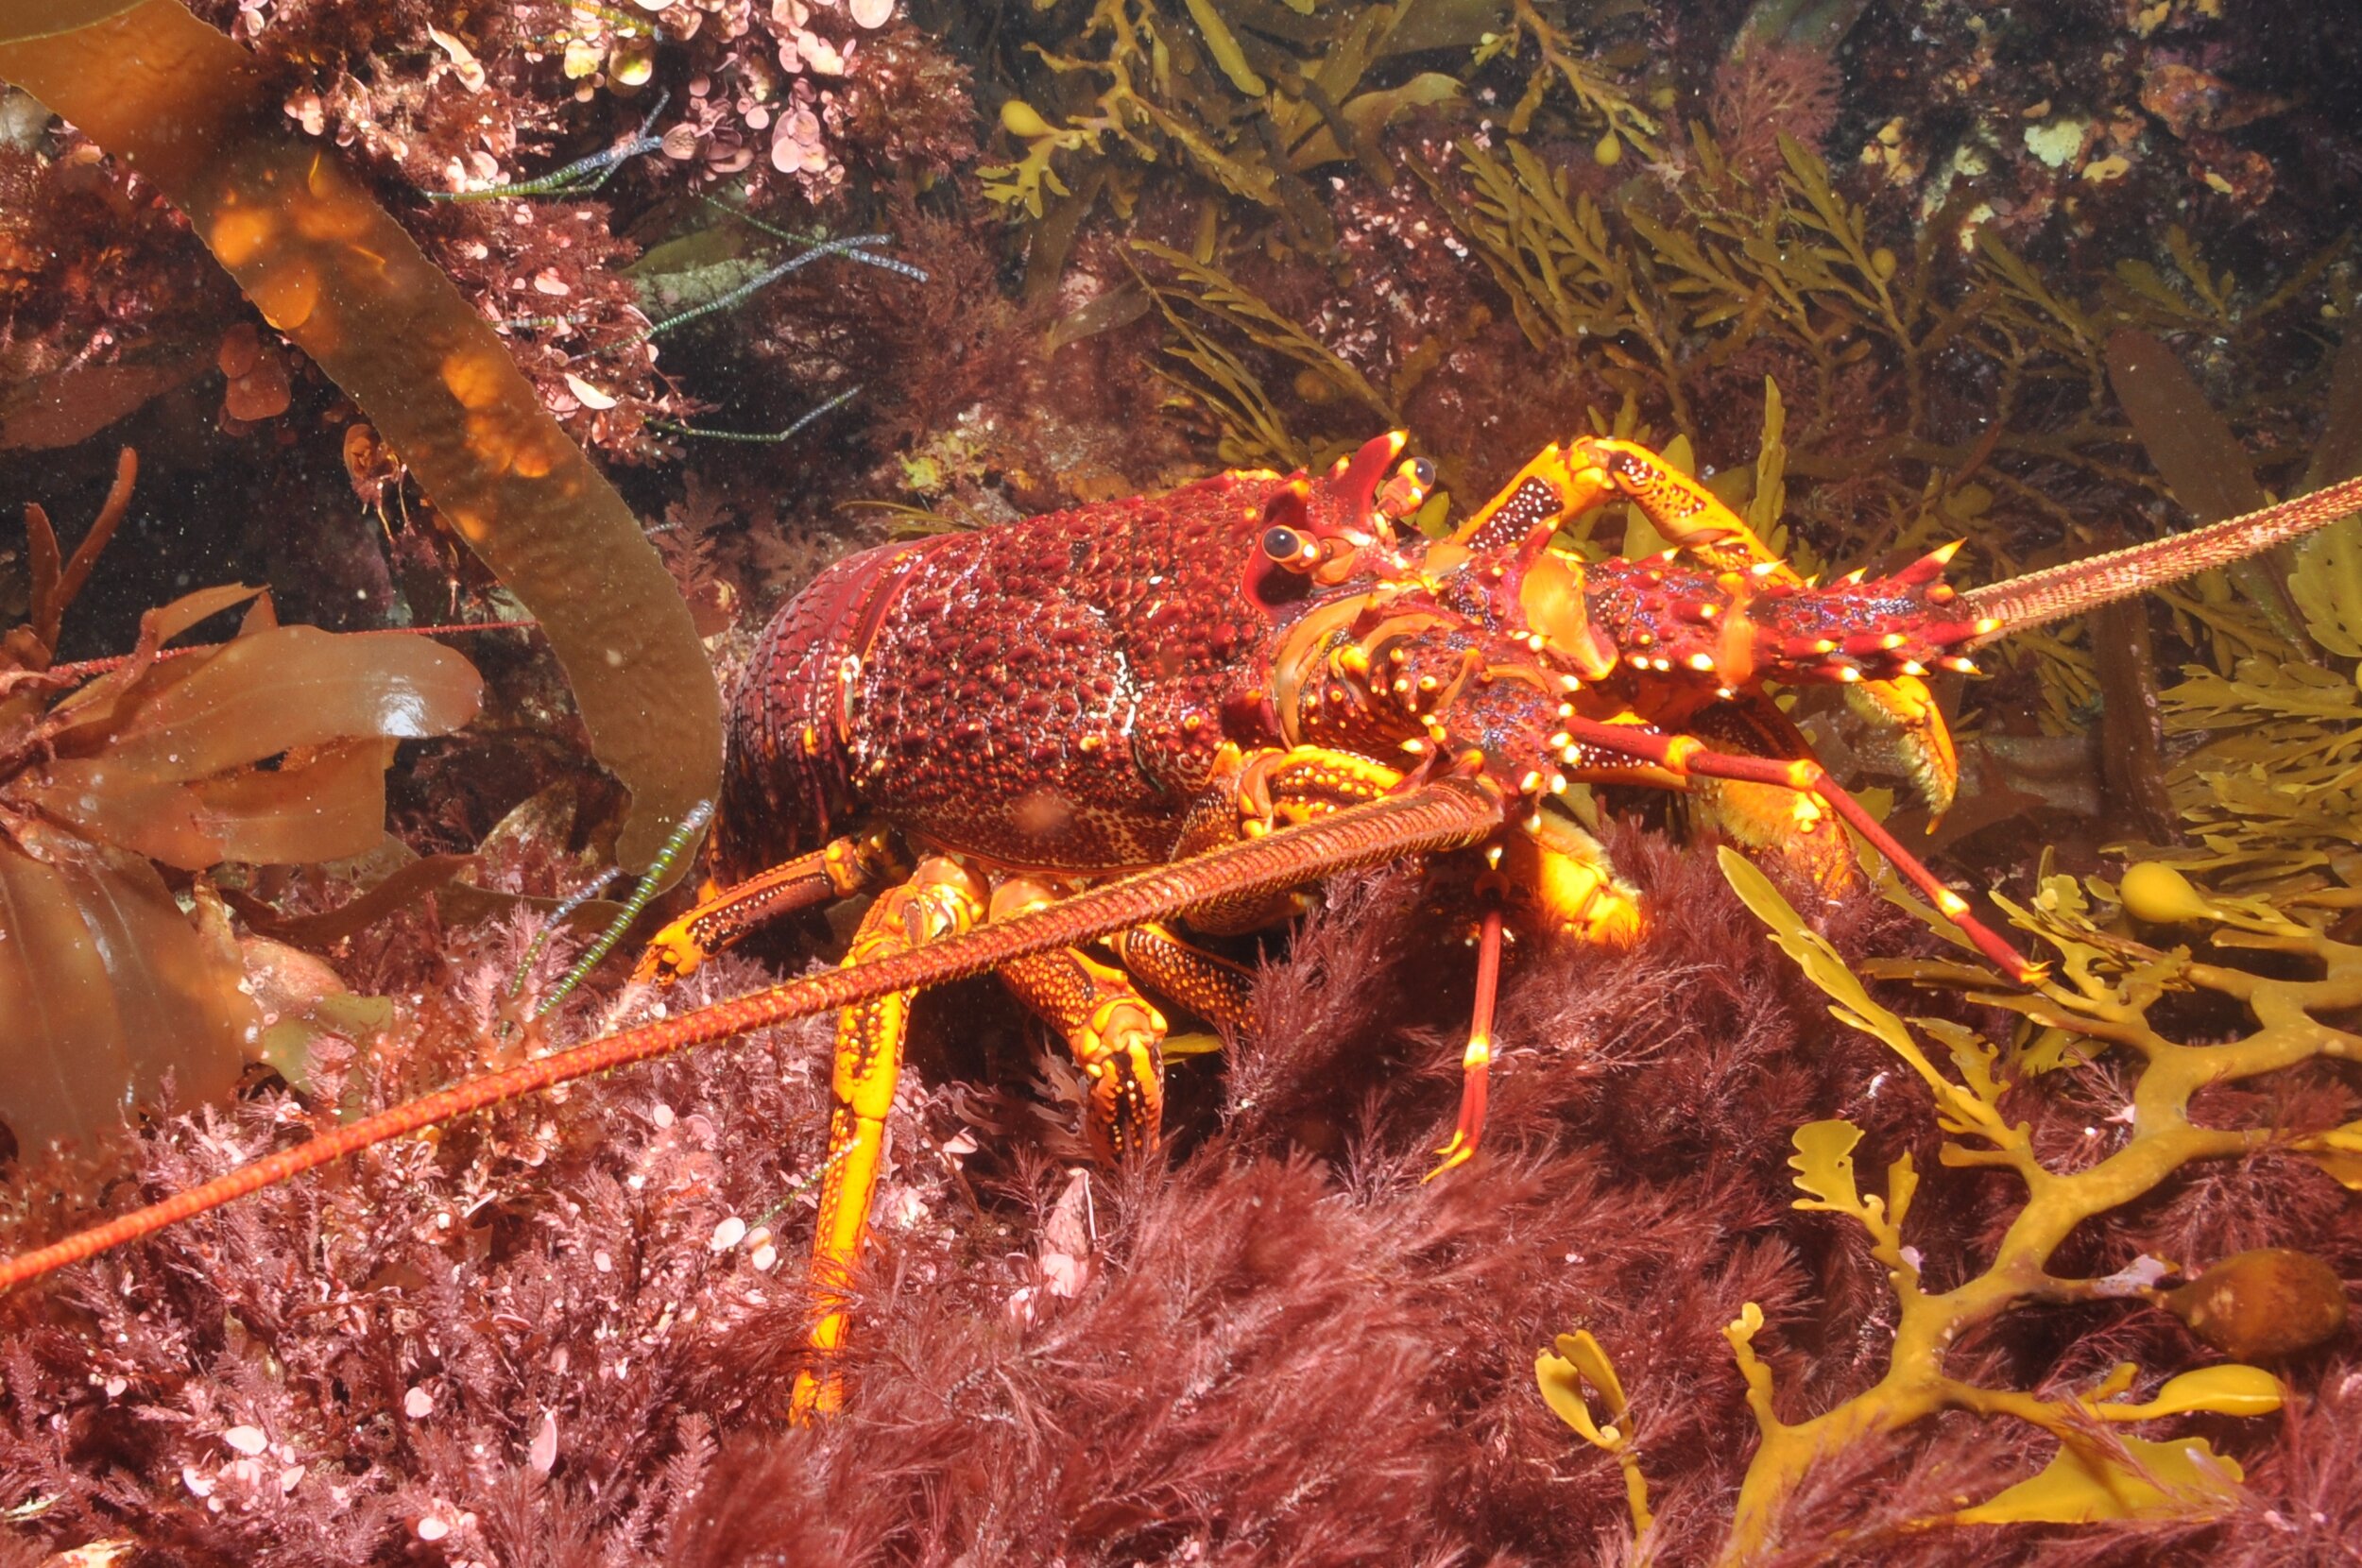  A carnivorous lobster ( Jasus edwardsii ) within a kelp and other macroalgal-dominated habitat on one of Australia’s many southerly, temperate reefs. Photo credit: Graham Edgar, University of Tasmania. 